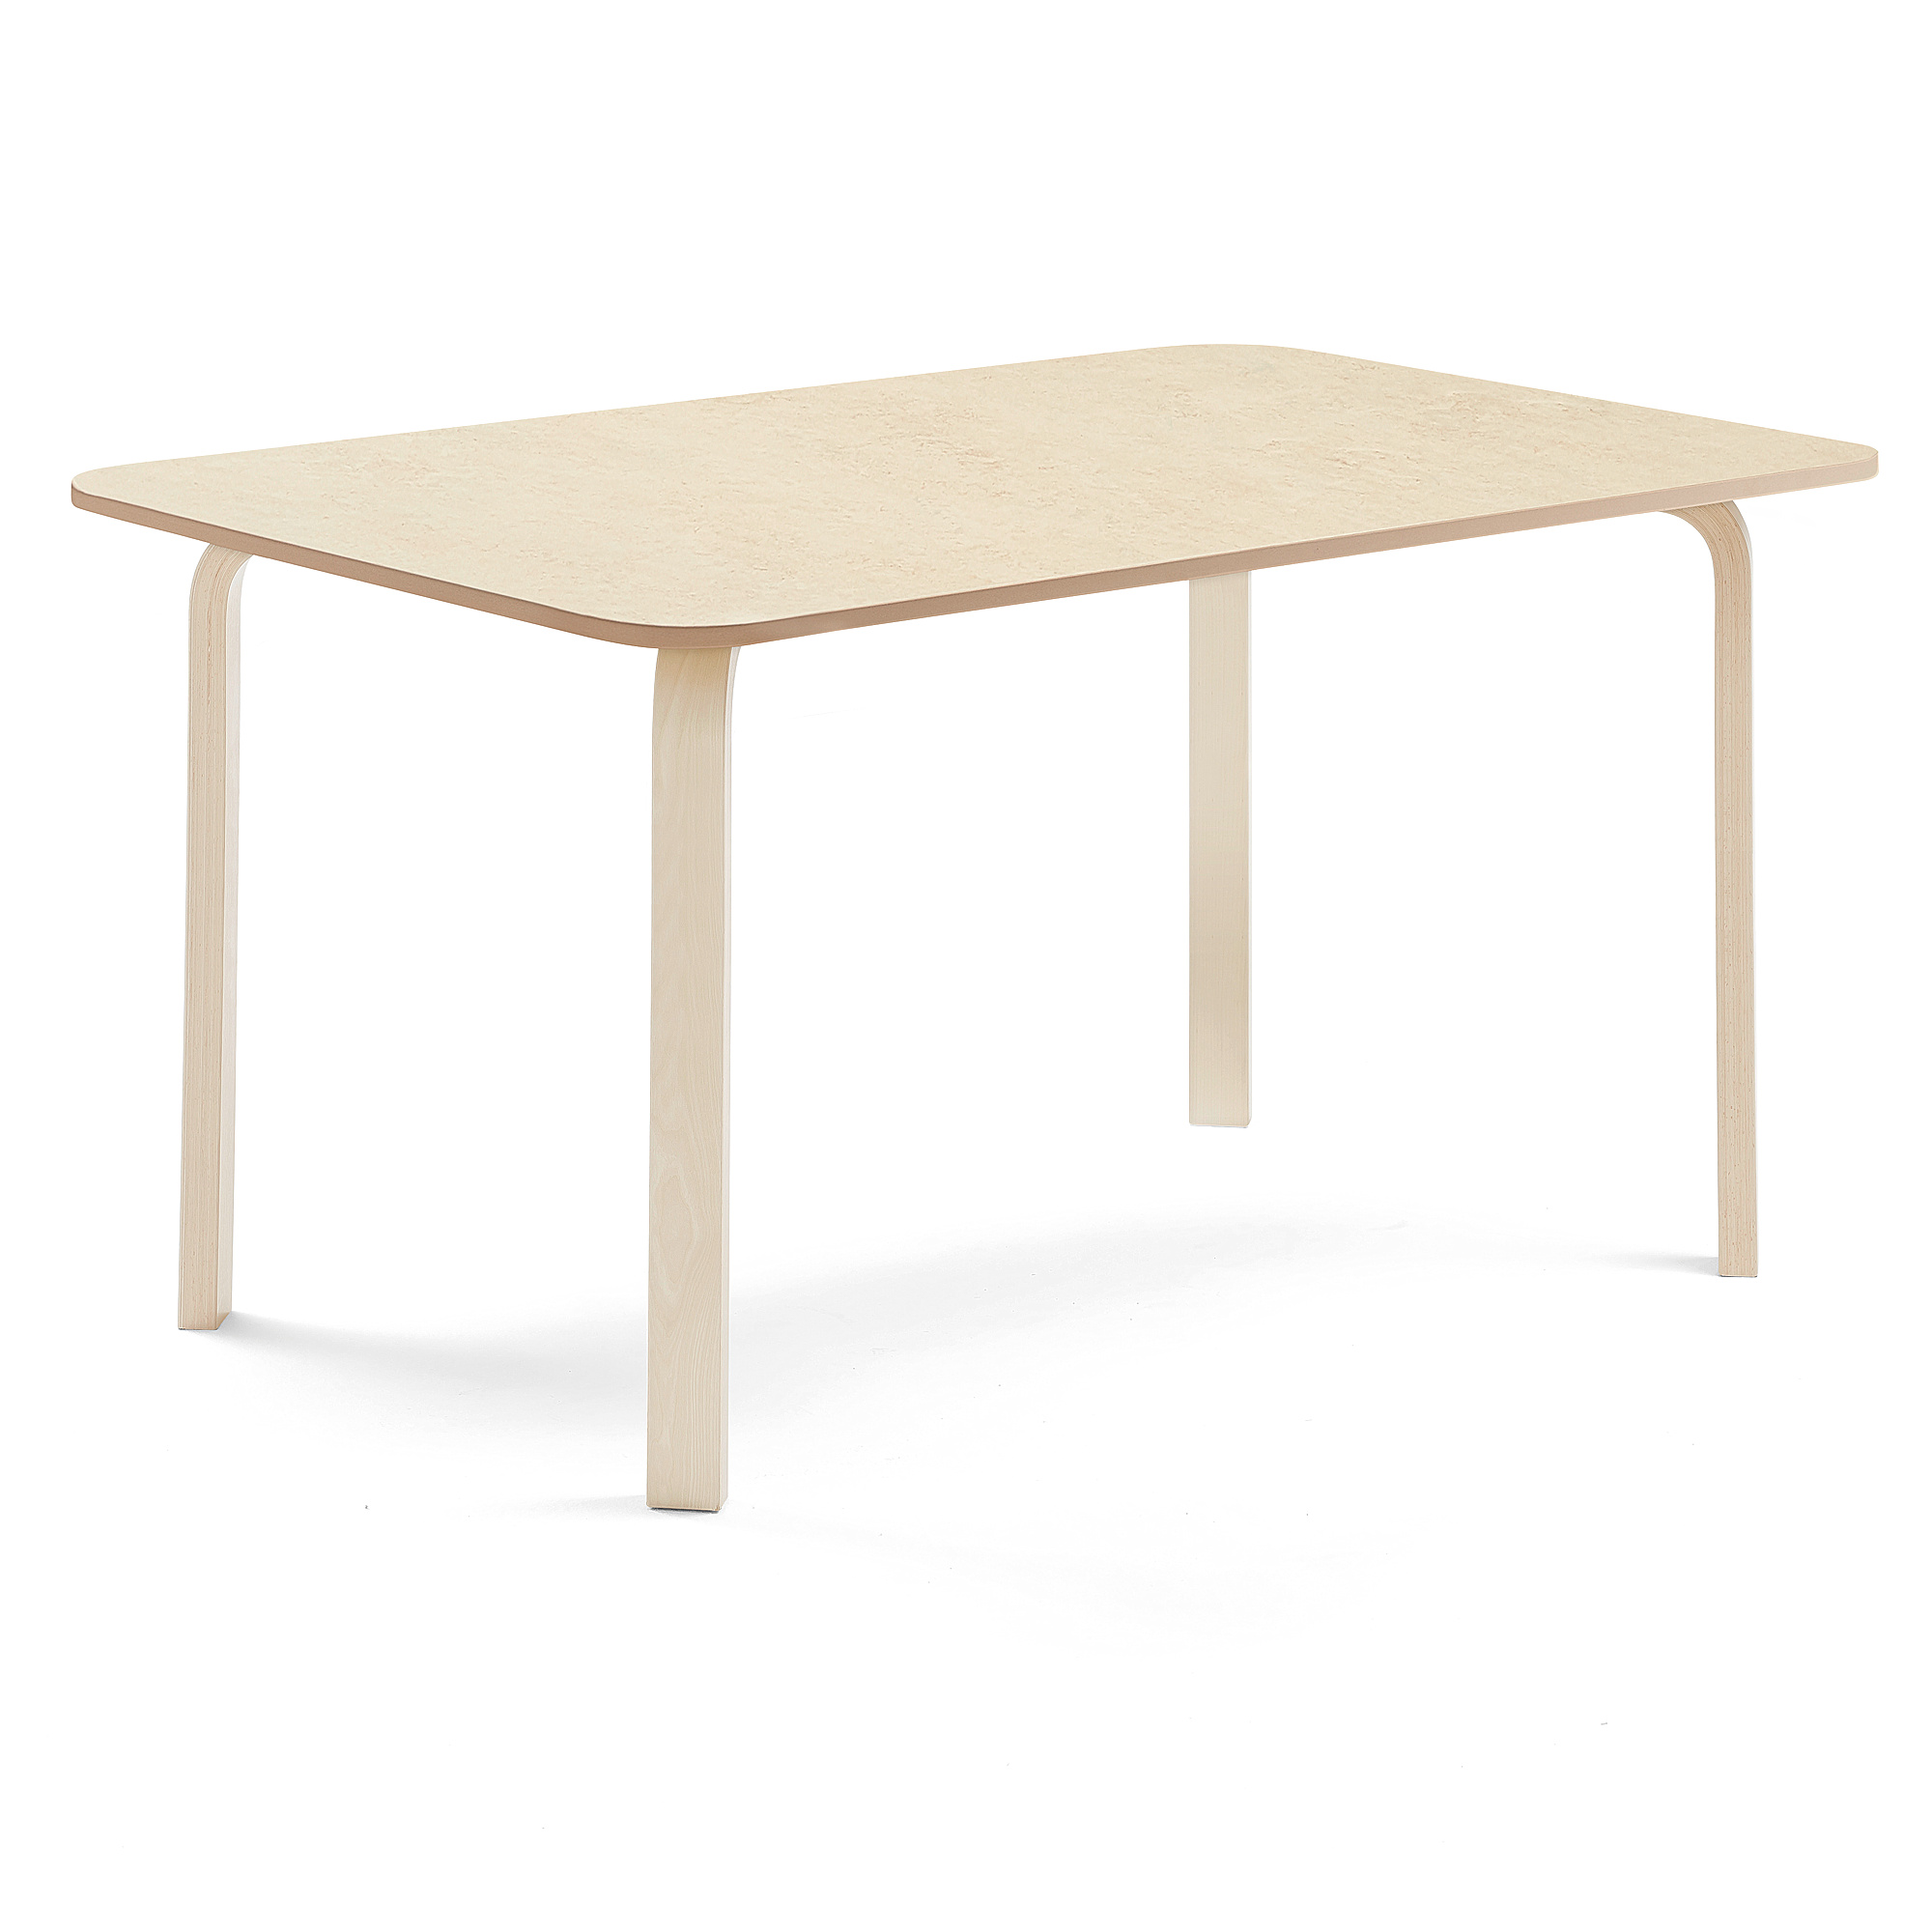 Stůl ELTON, 1800x800x710 mm, bříza, akustické linoleum, béžová